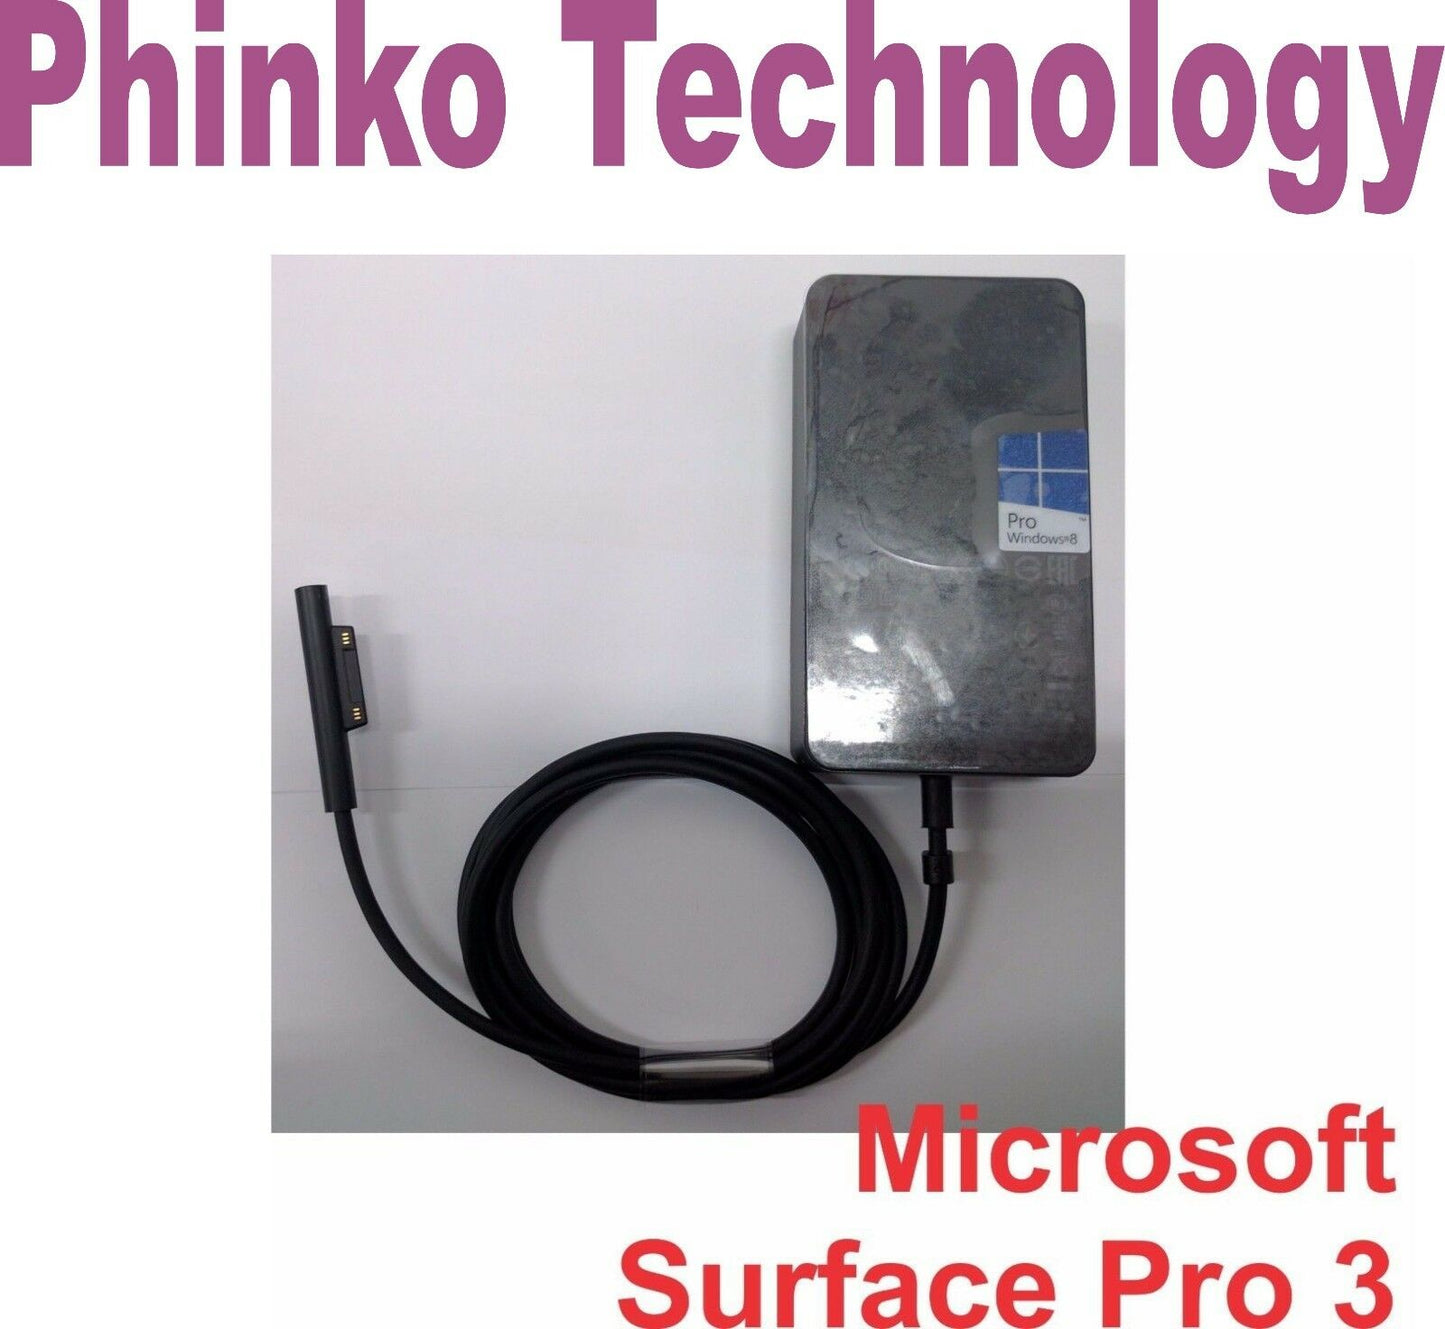 Microsoft Pro 3/4 Microsoft Surface Pro 3 AC Adapter Charger 12V 2.58A